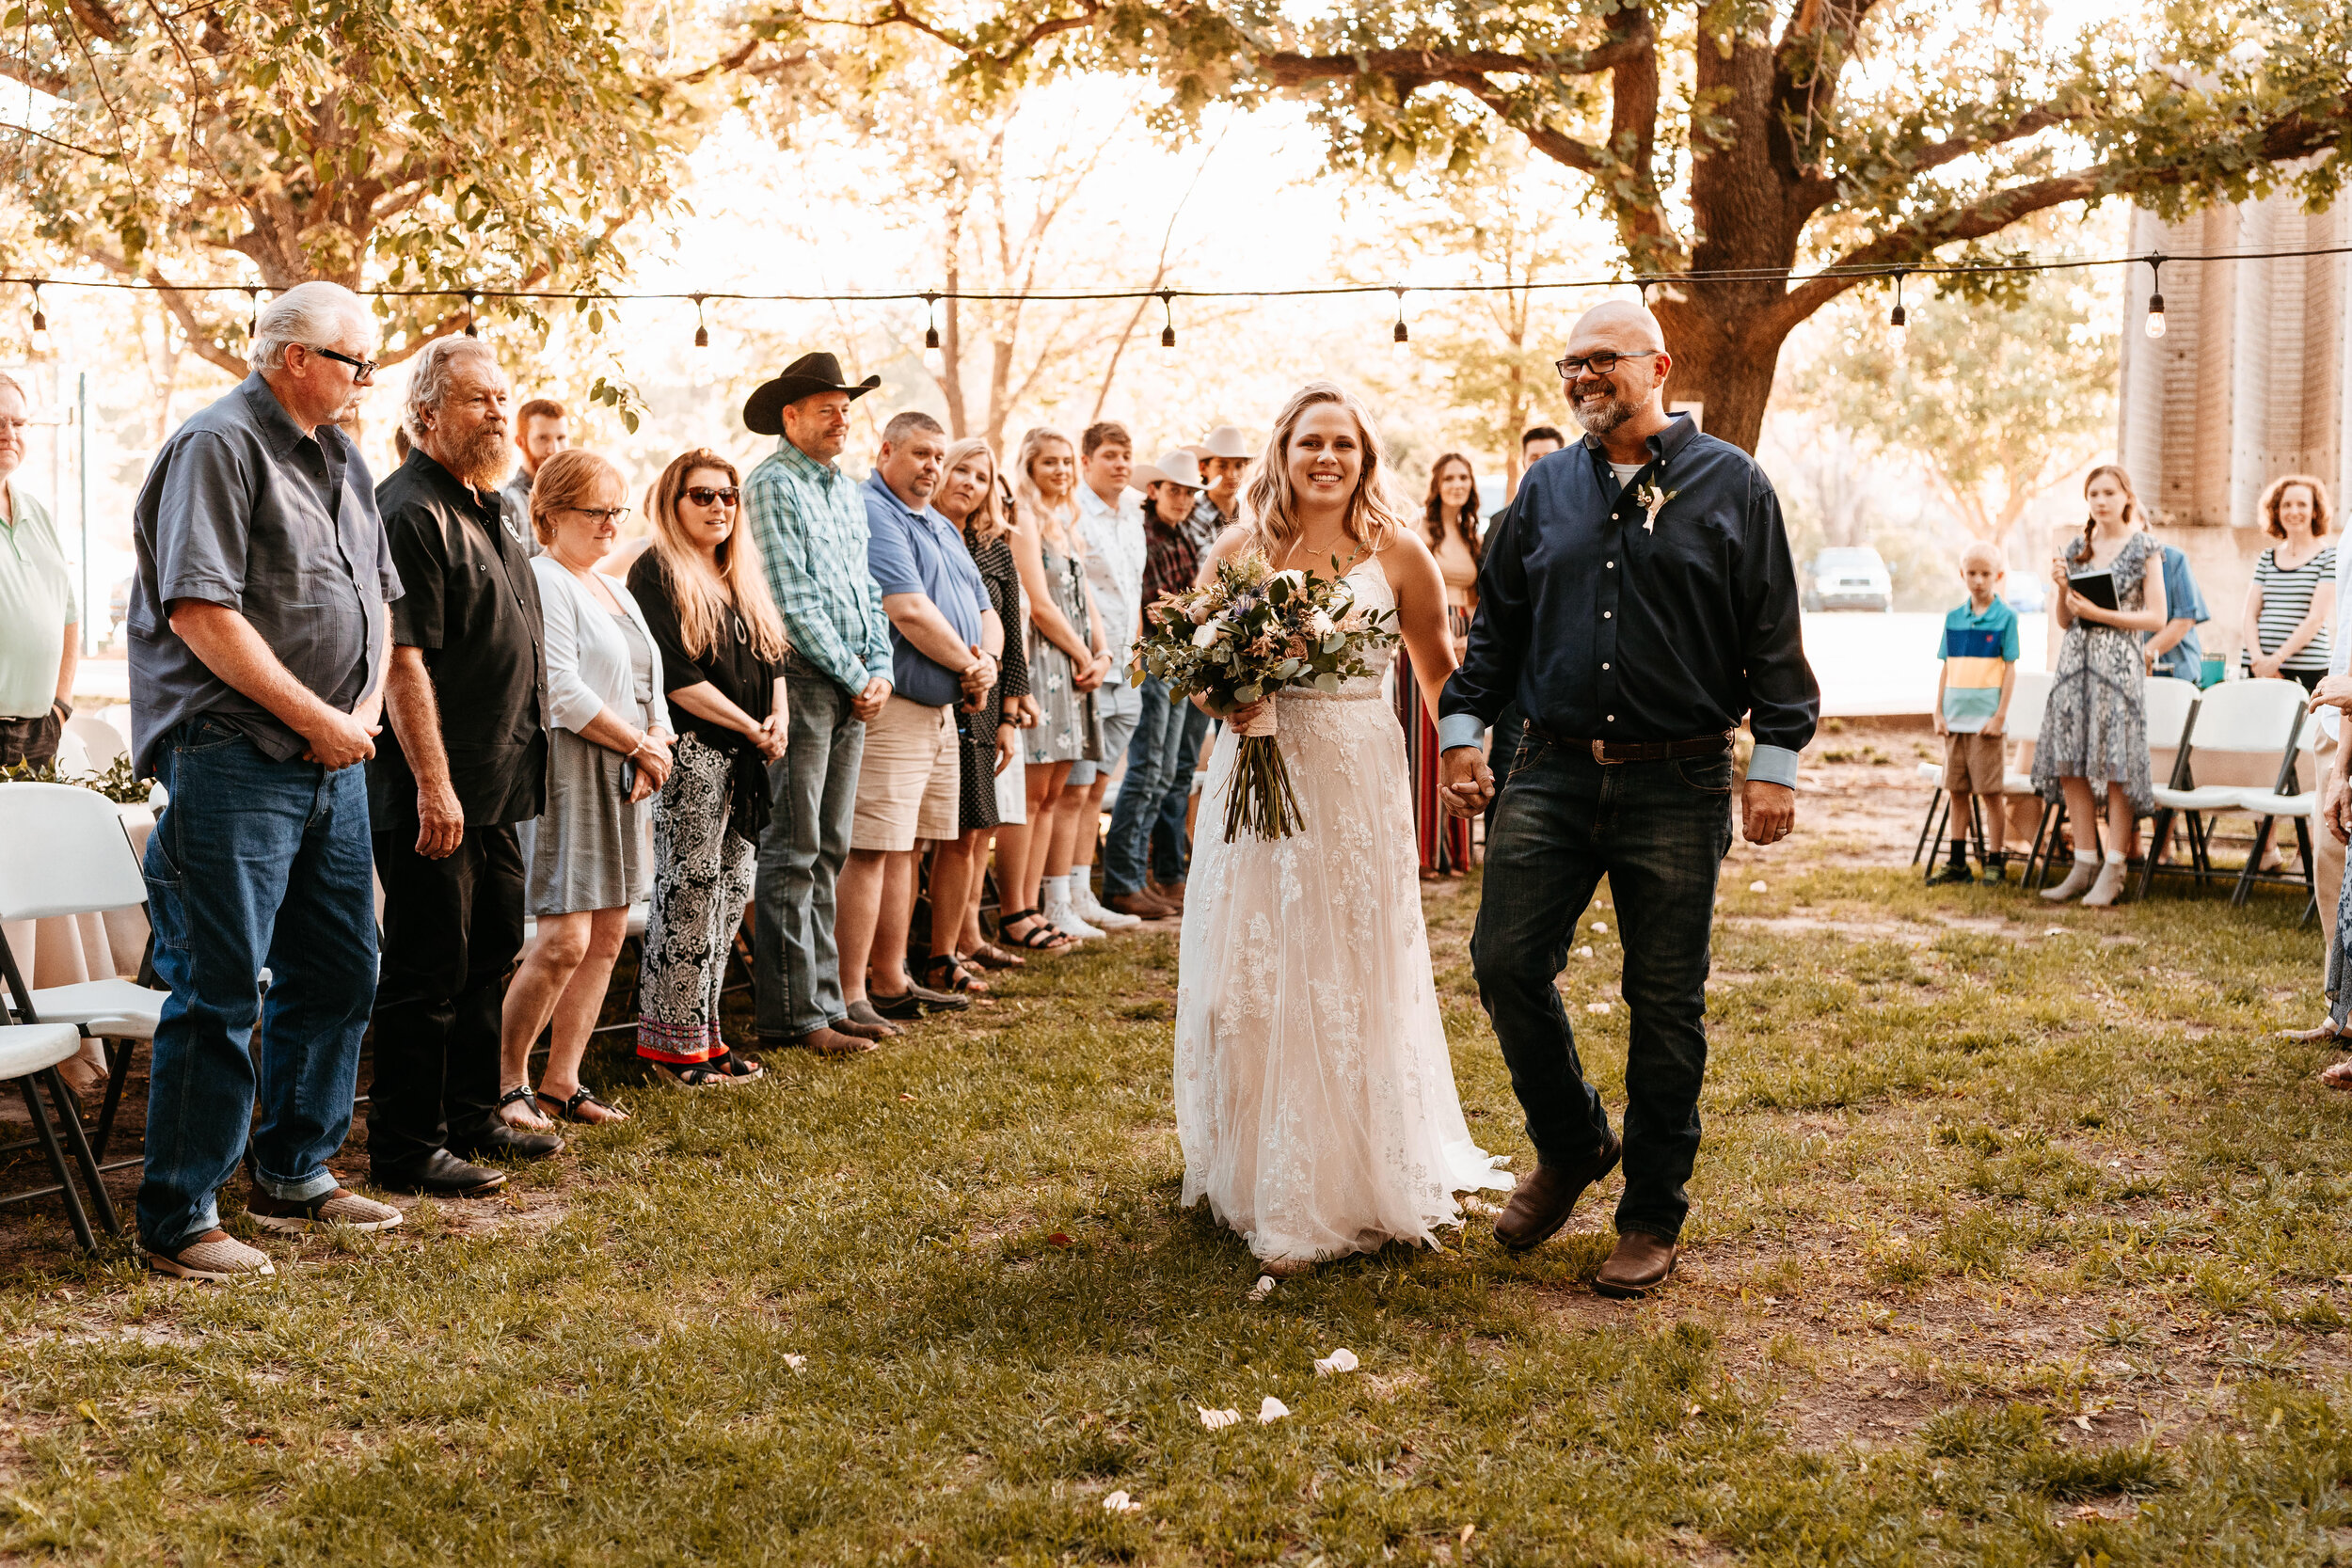 Lynsey + Morgan - Backyard Summer Wichita, Kansas Wedding31.jpg